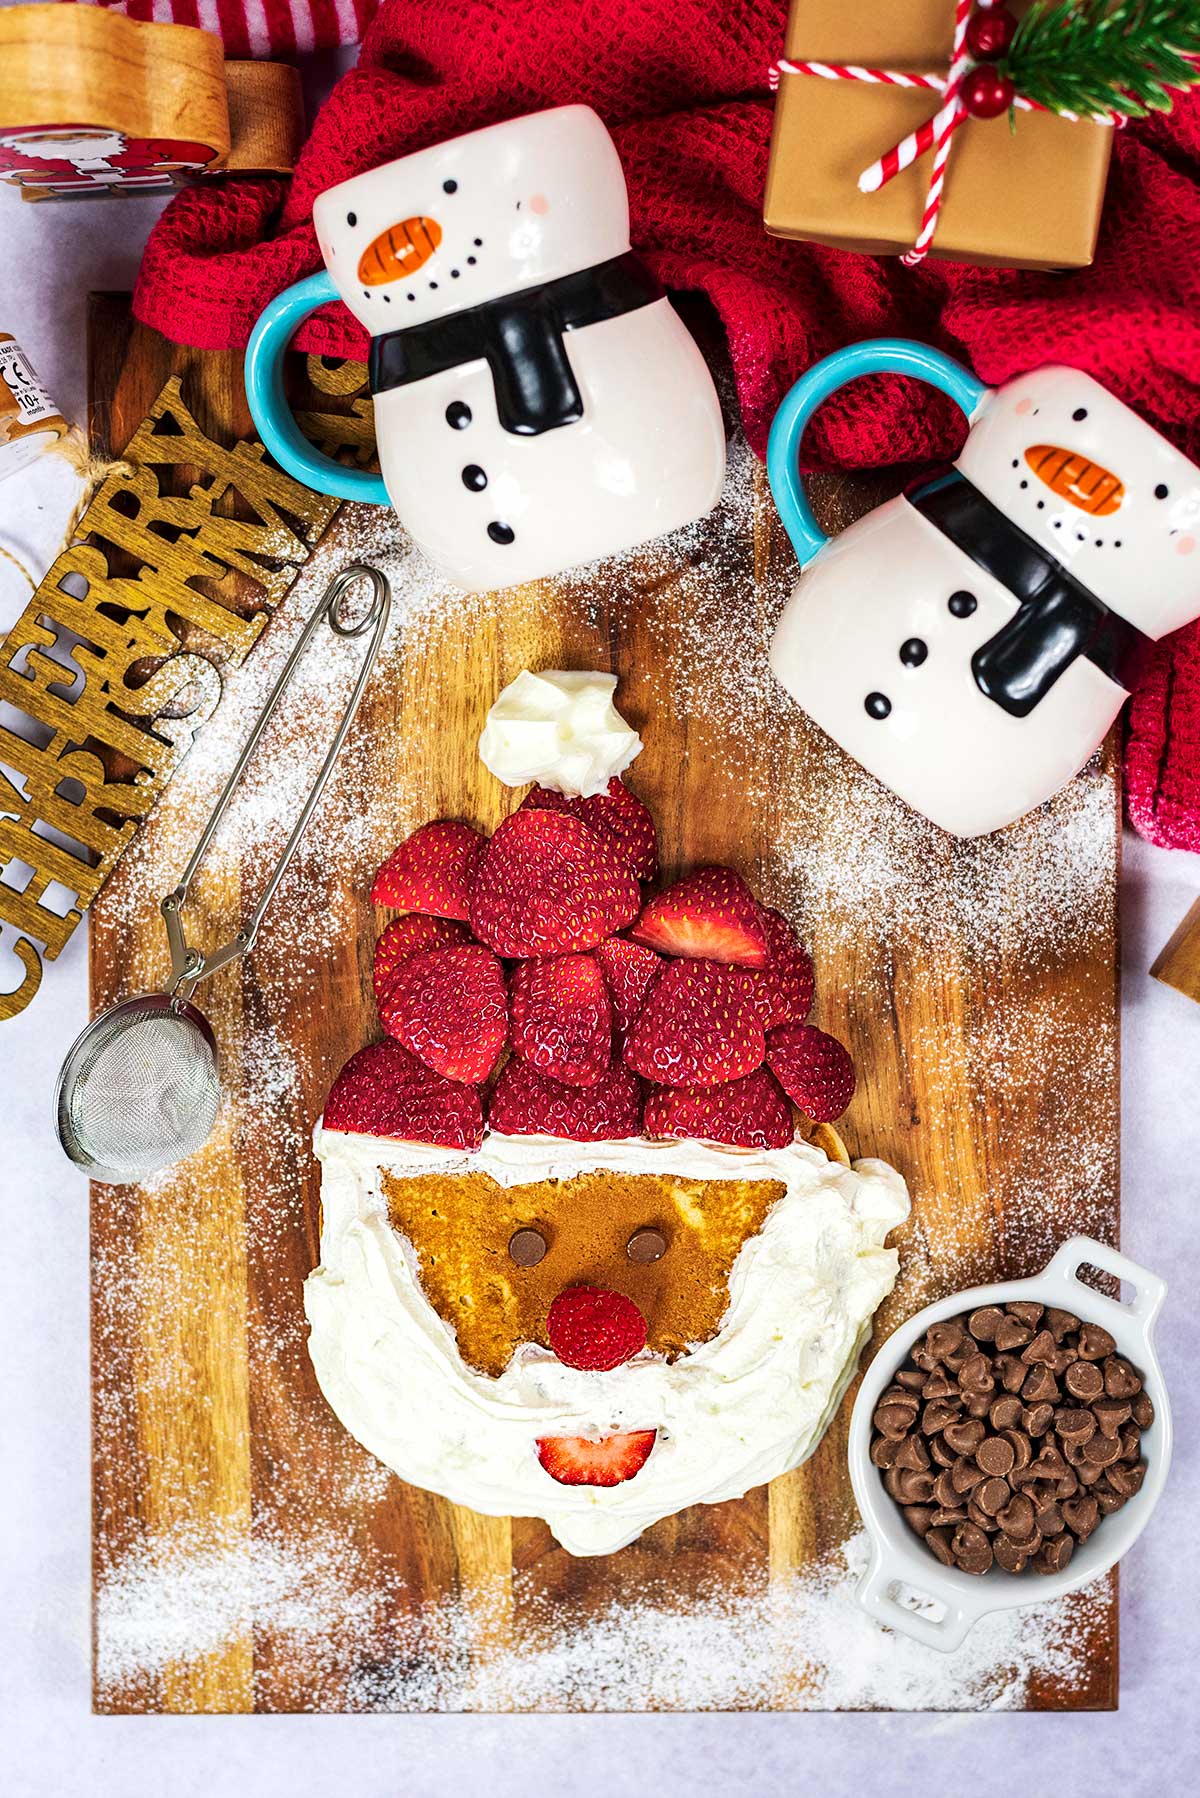 A pancake decorated like Santa Claus next to two snowman shaped mugs.